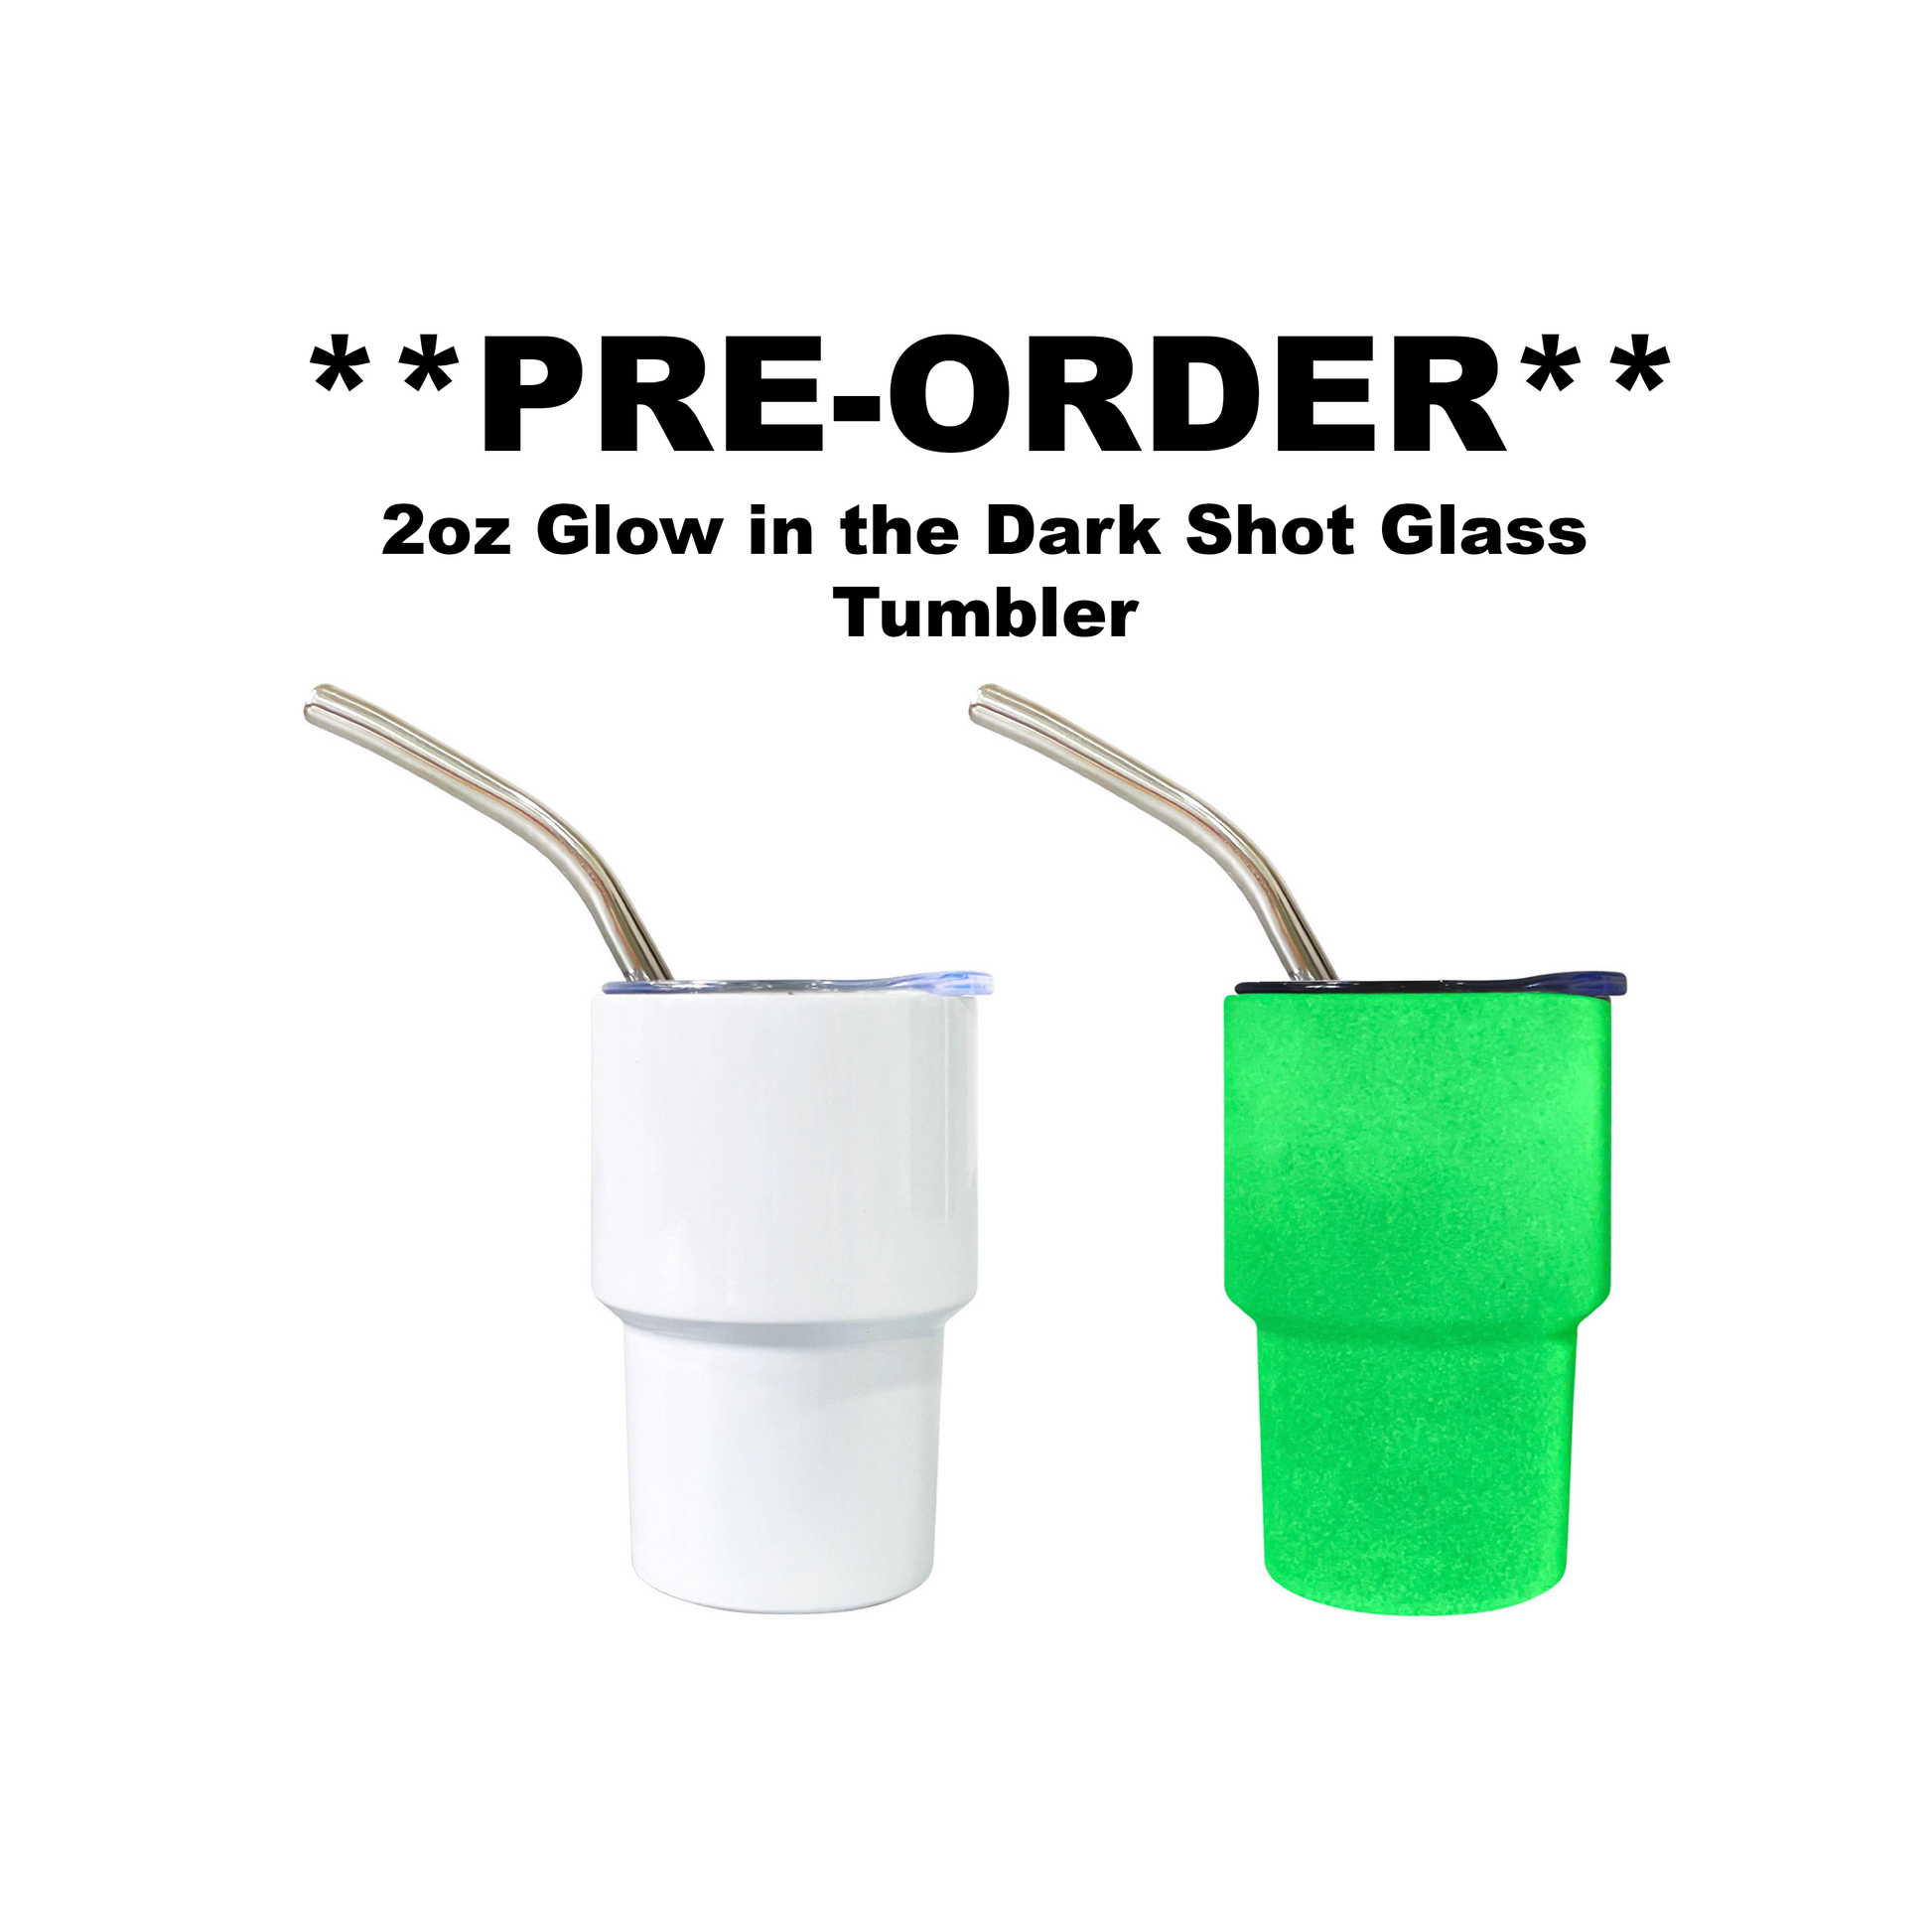 Mini tumbler shot glass